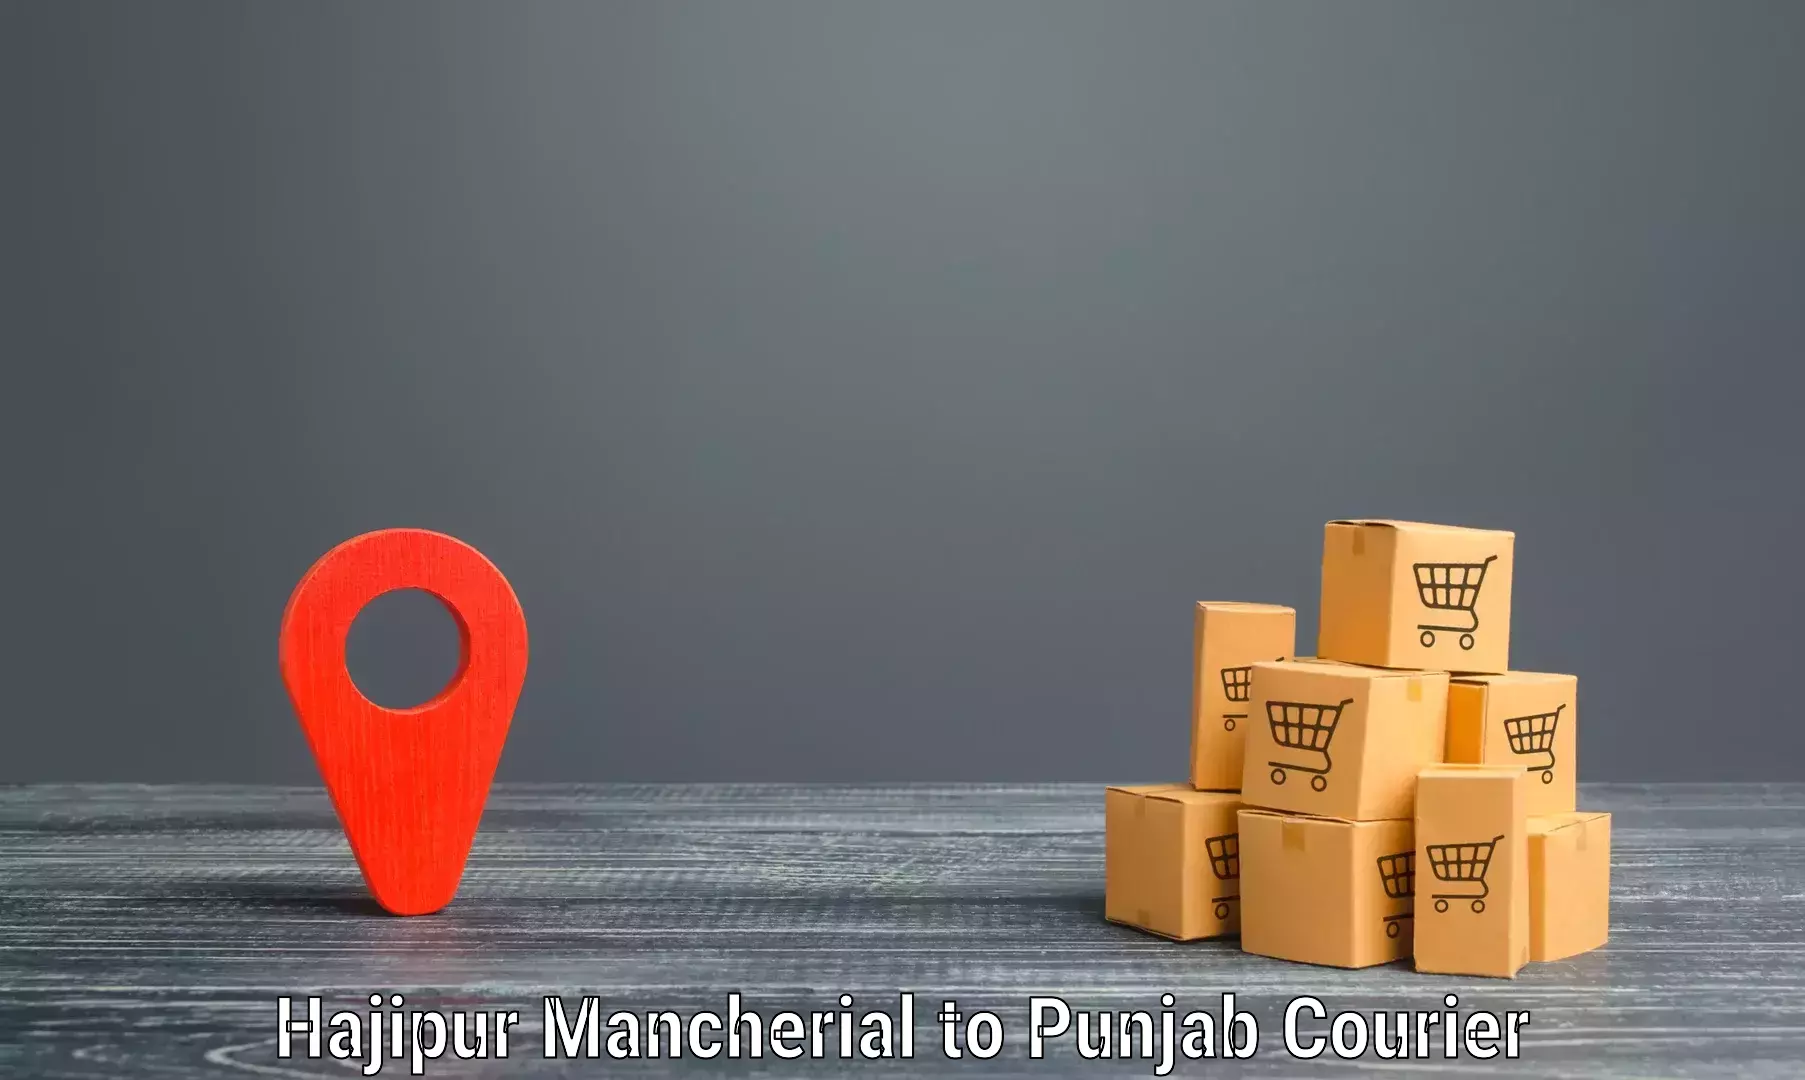 High-speed parcel service Hajipur Mancherial to Jalandhar